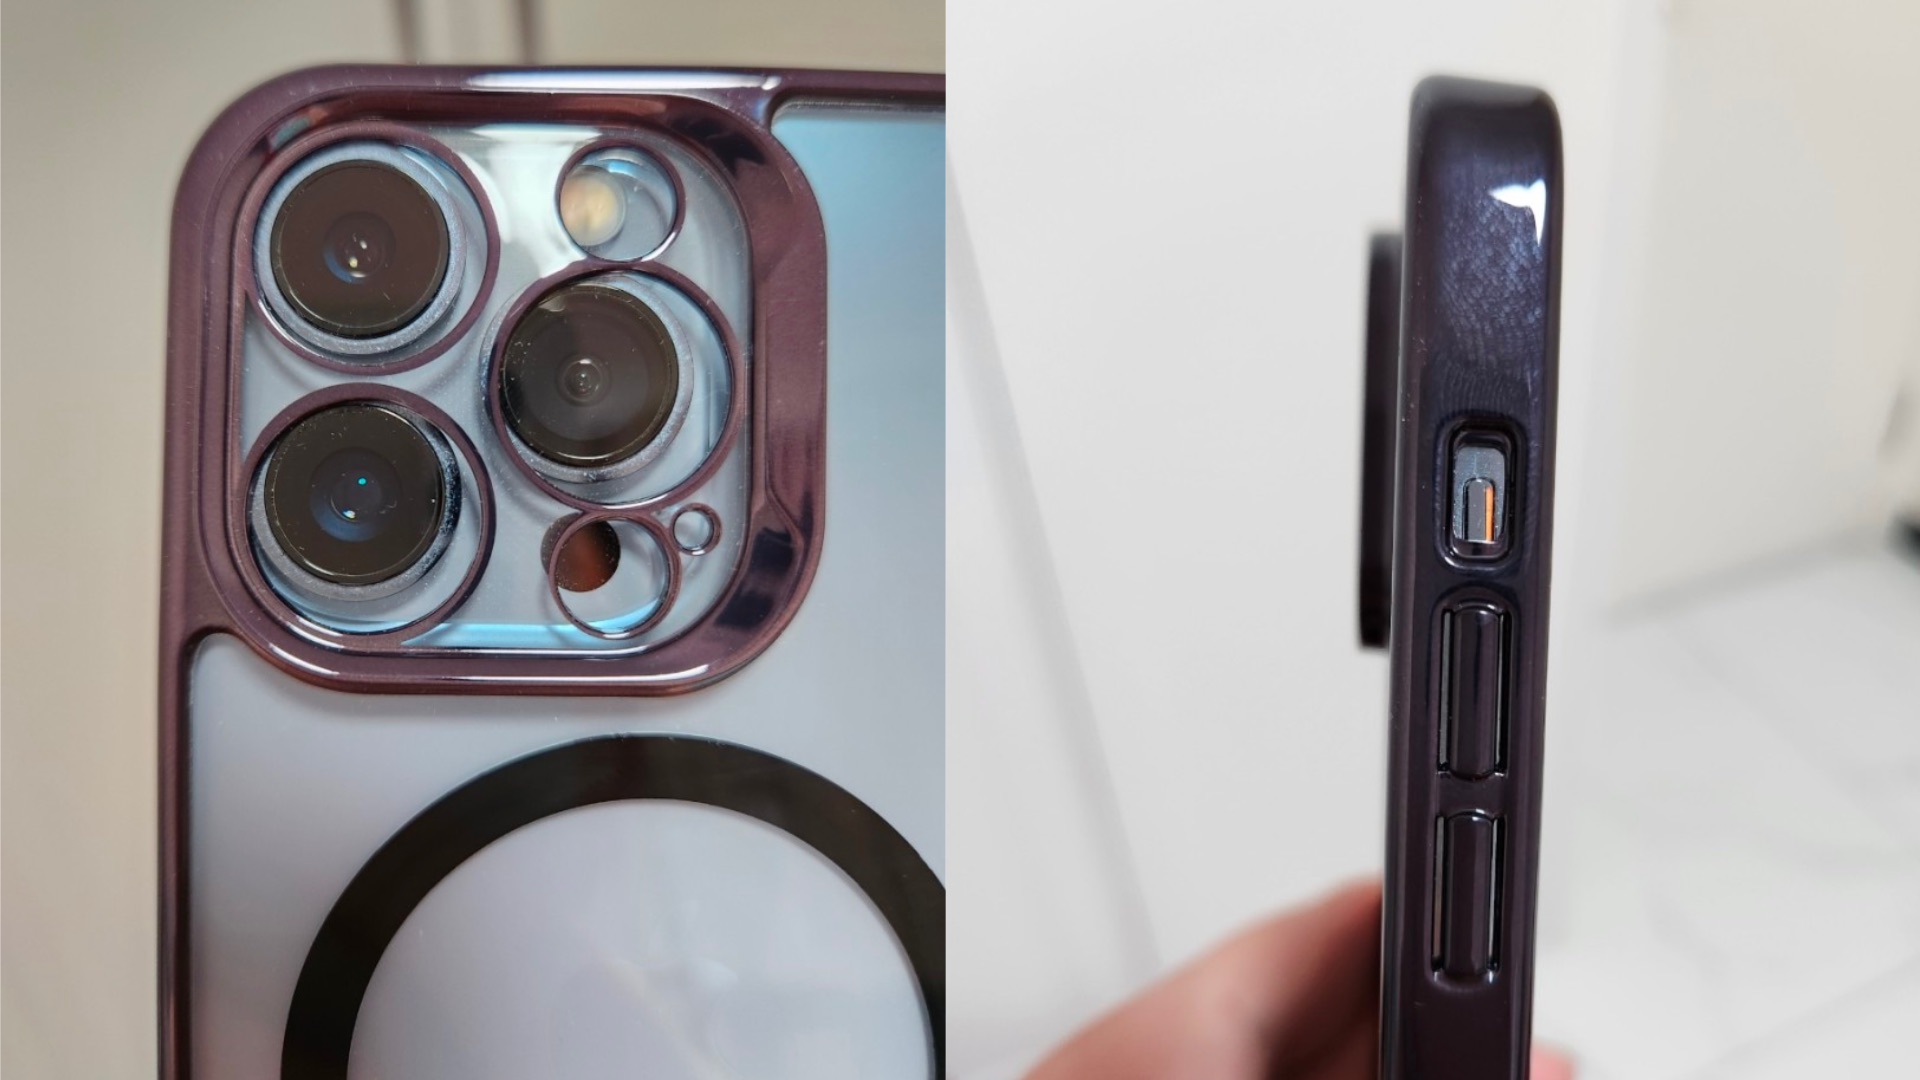 iPhone 14 Pro Case Comparison Shows Wider Diameter of Rear Camera Lenses